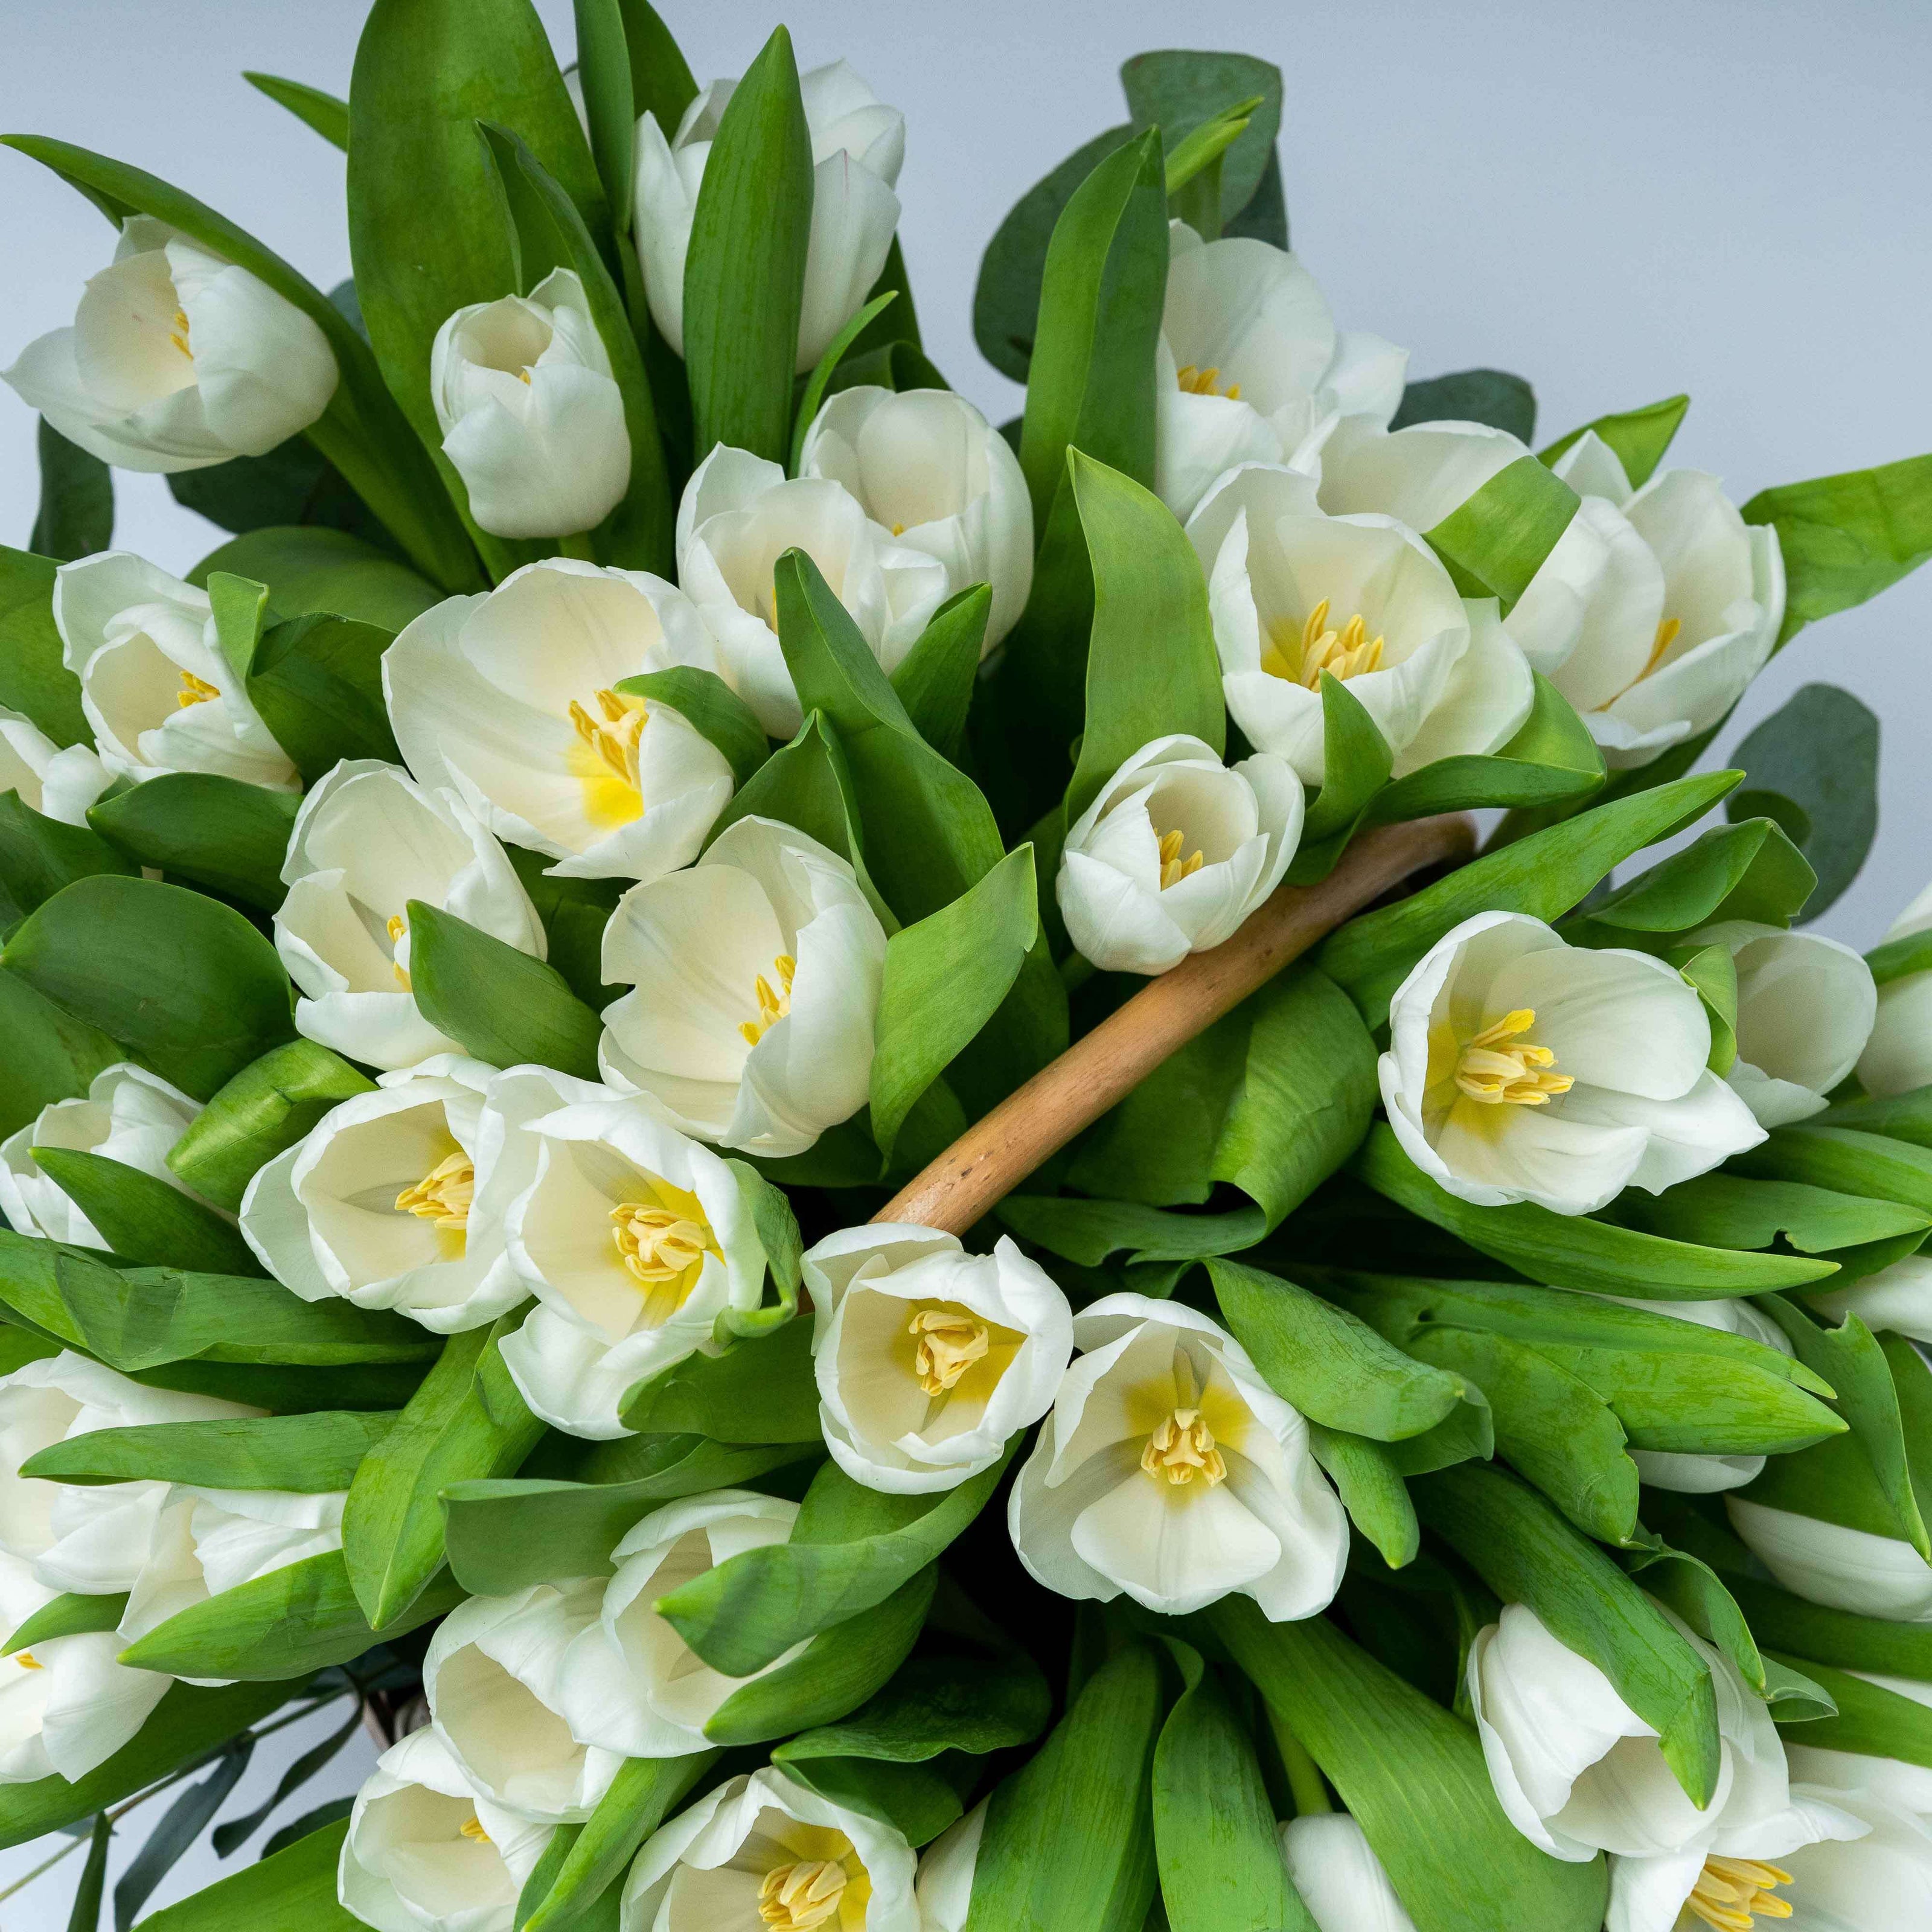 Purity Tulip Flower Baskets